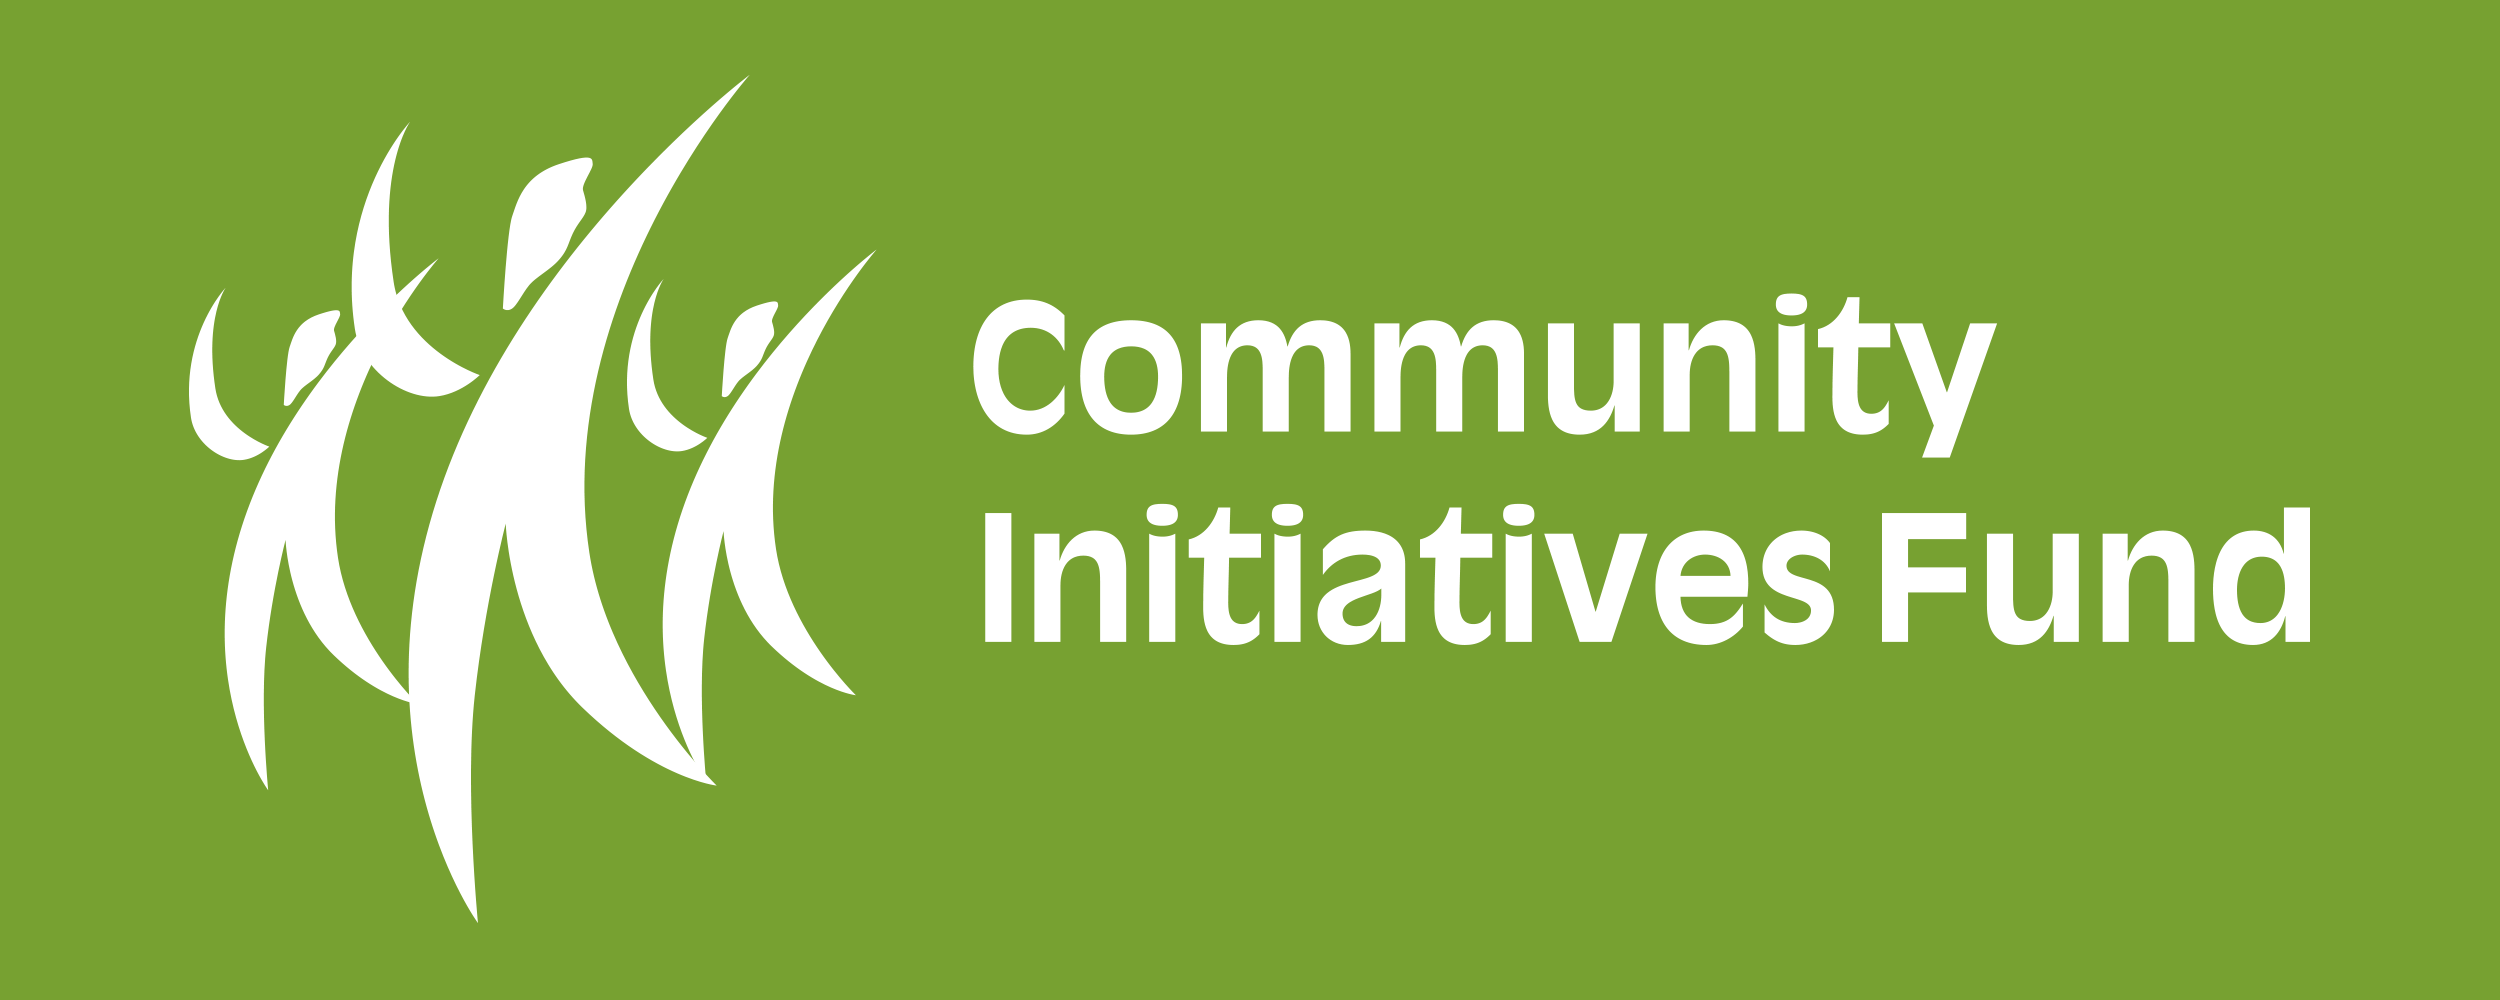 Community Initiatives Fund white logo horizontall on green background